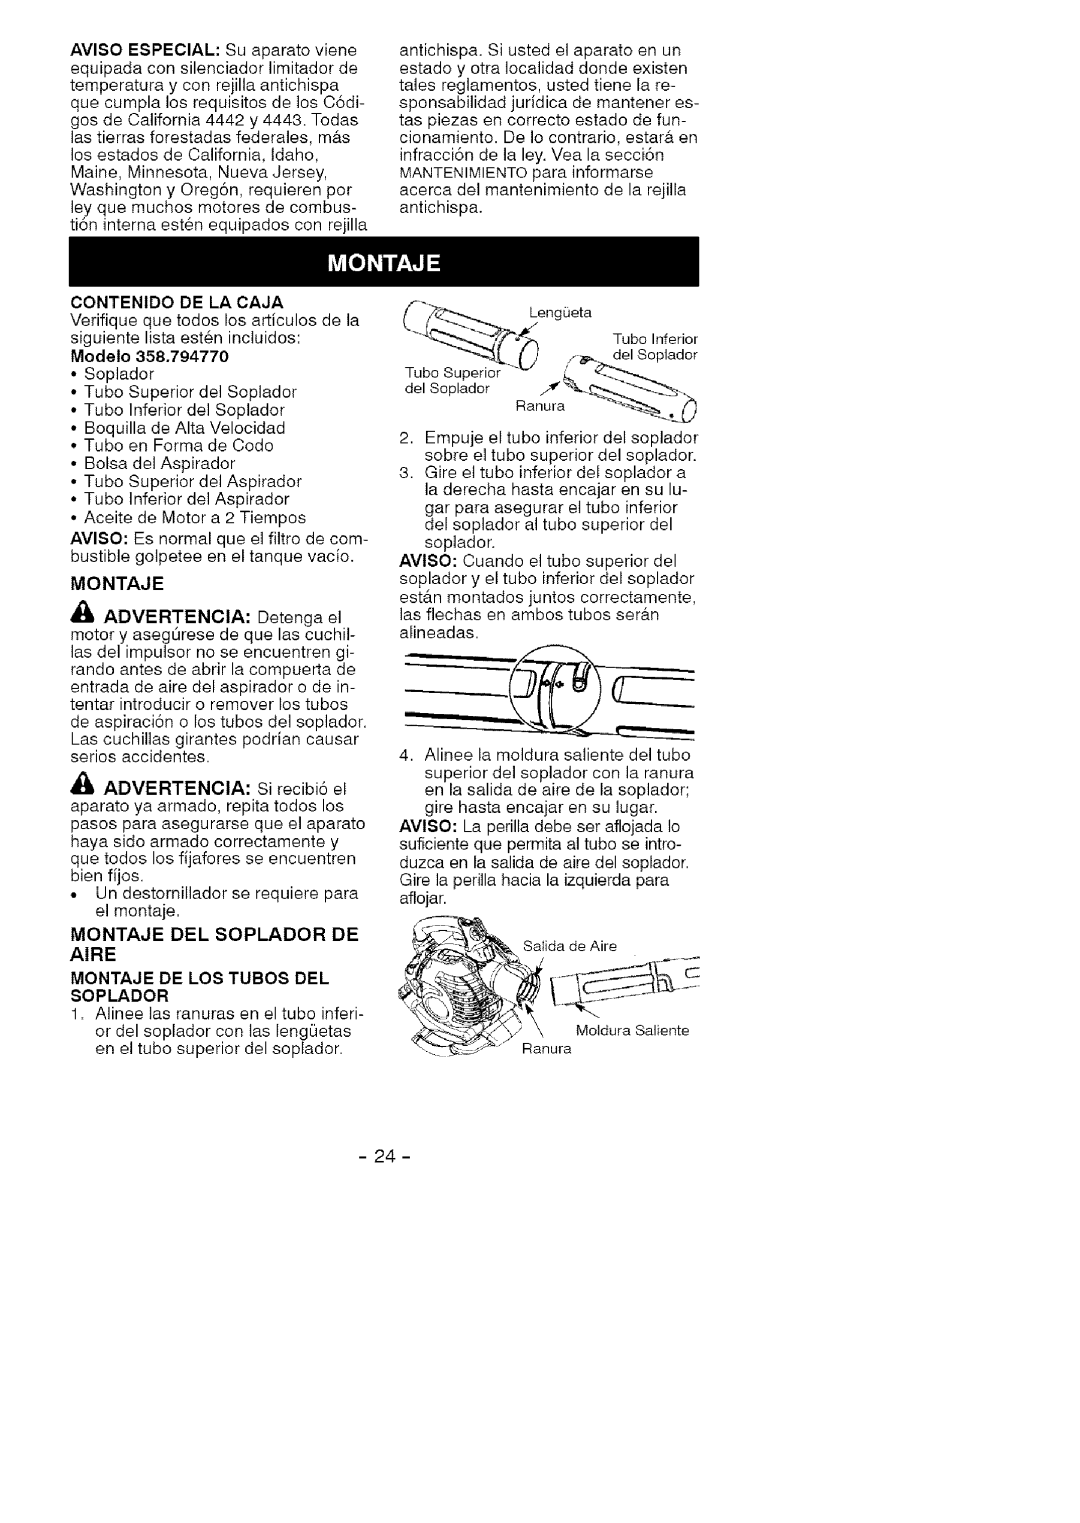 Craftsman 358.79477 manual Modelo, Montaje 